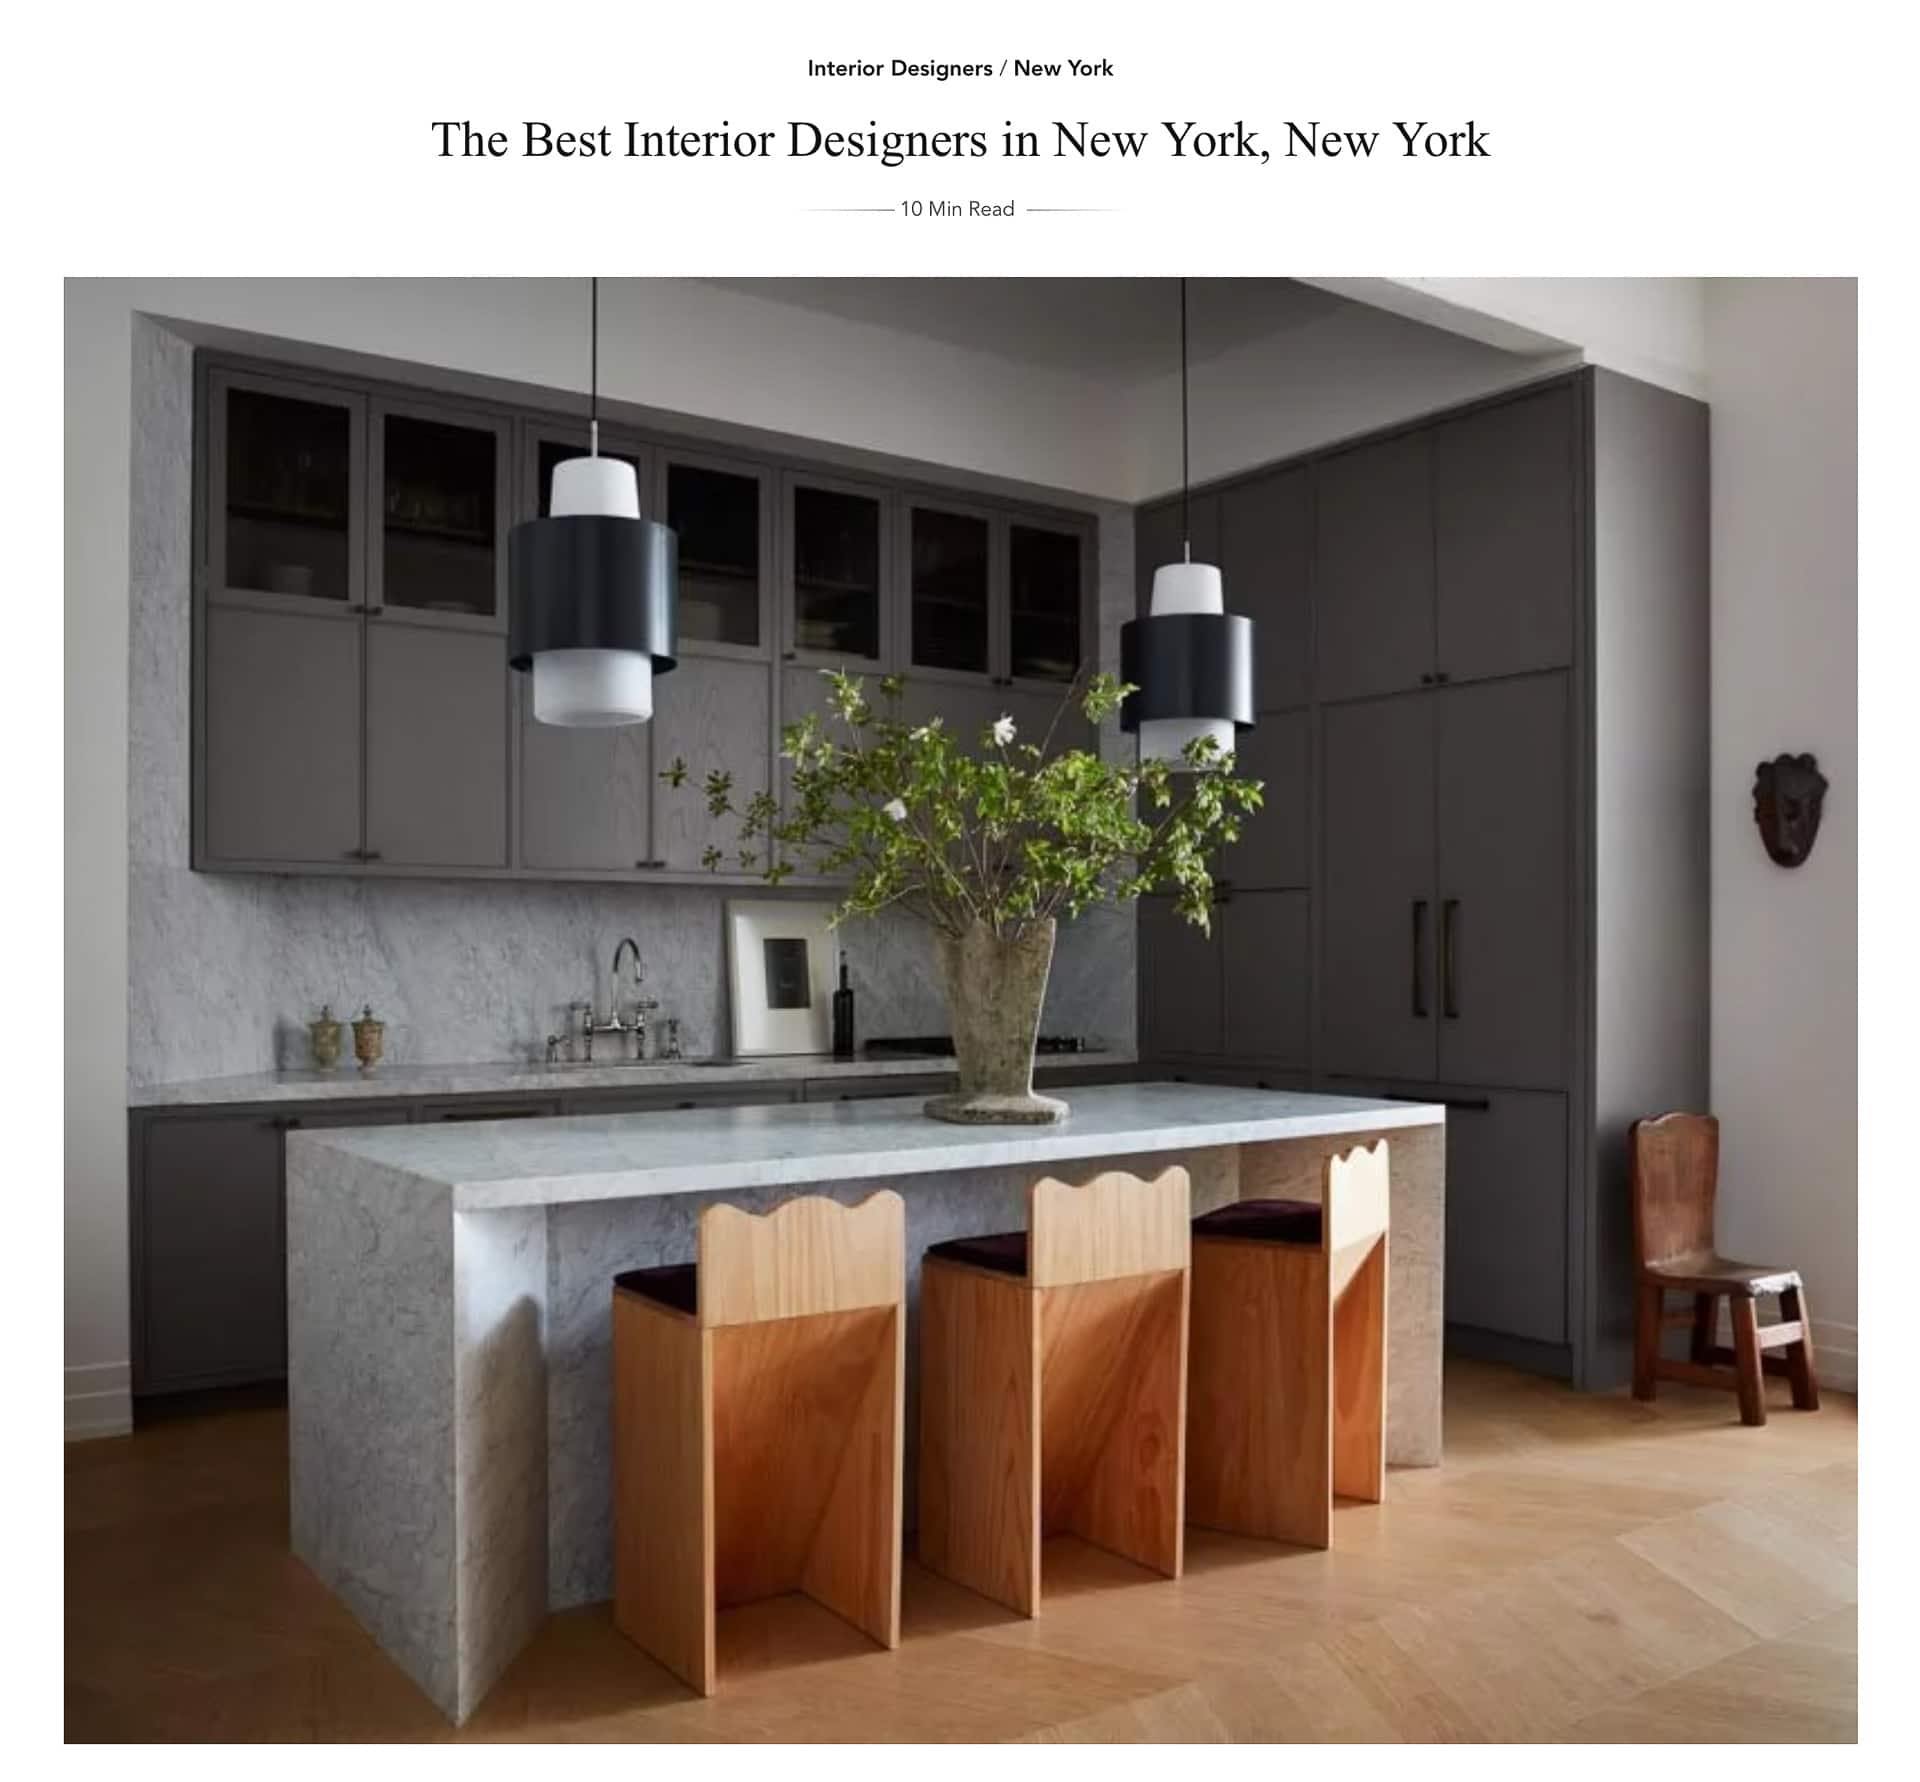 General Contractors Magazine - Best Interior Designers in New York, New York - Glenn Gissler Design